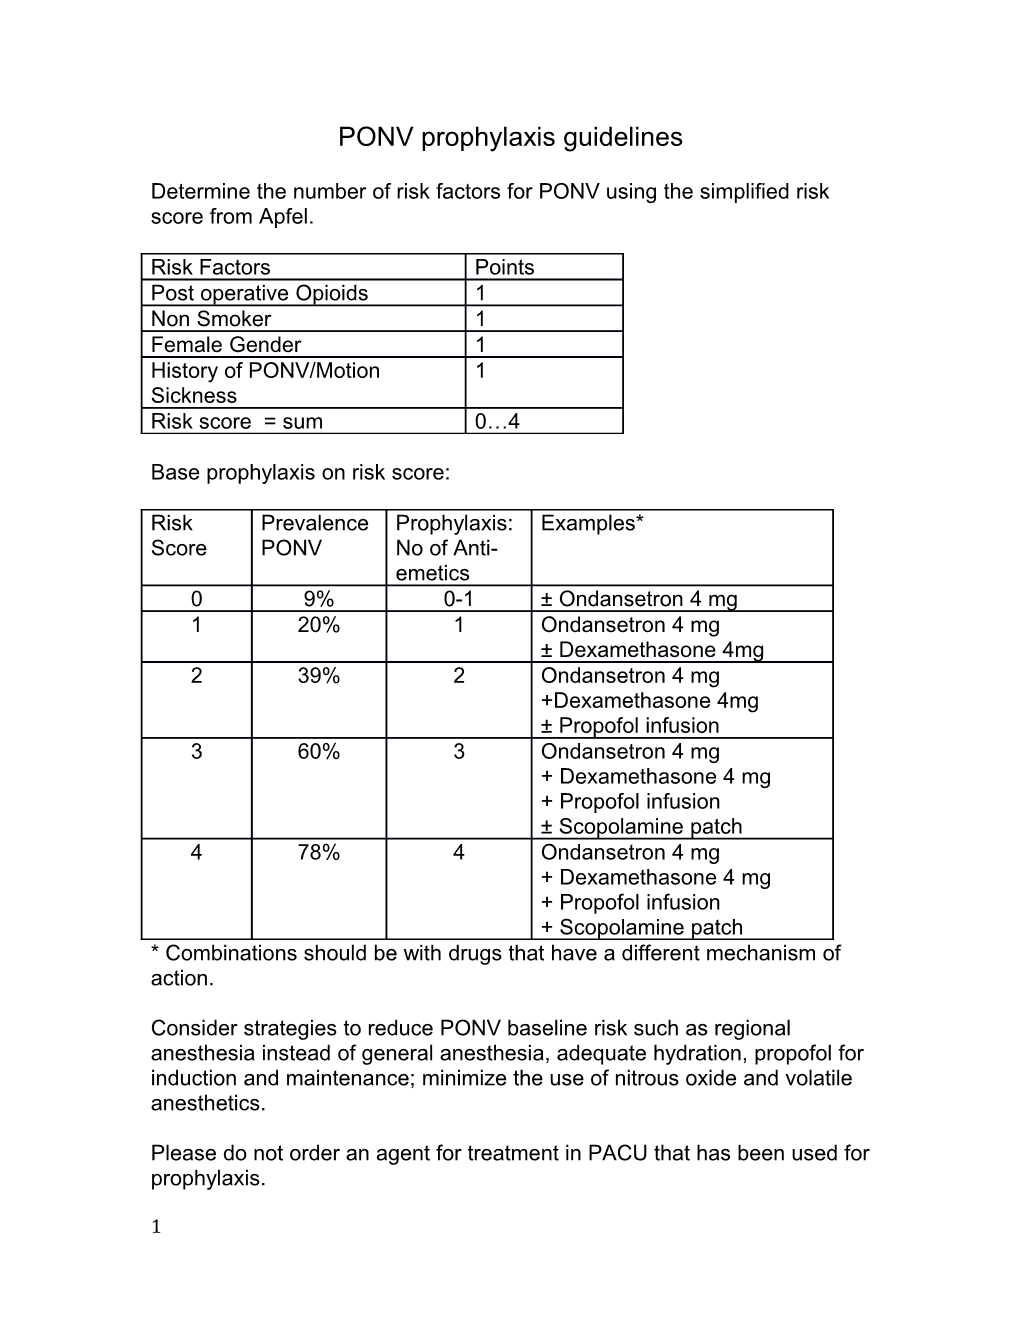 PONV Prophylaxis Guidelines